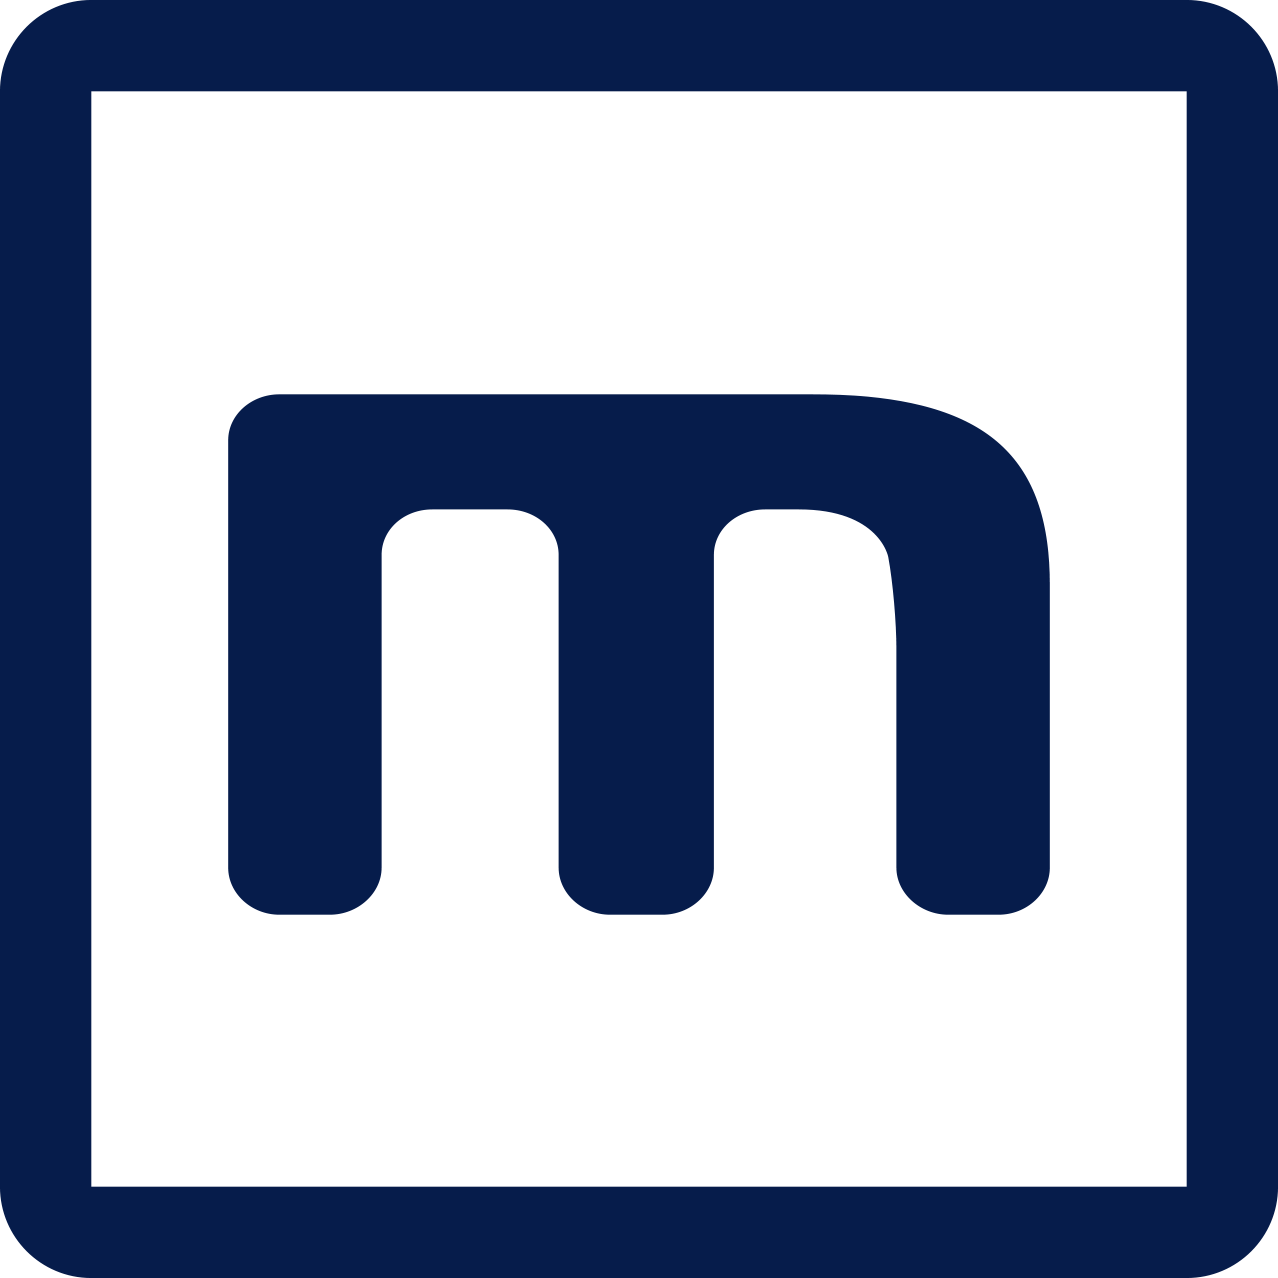 Mimecast Contributing Writer - Mimecast Contributing Writer (1278x1278)